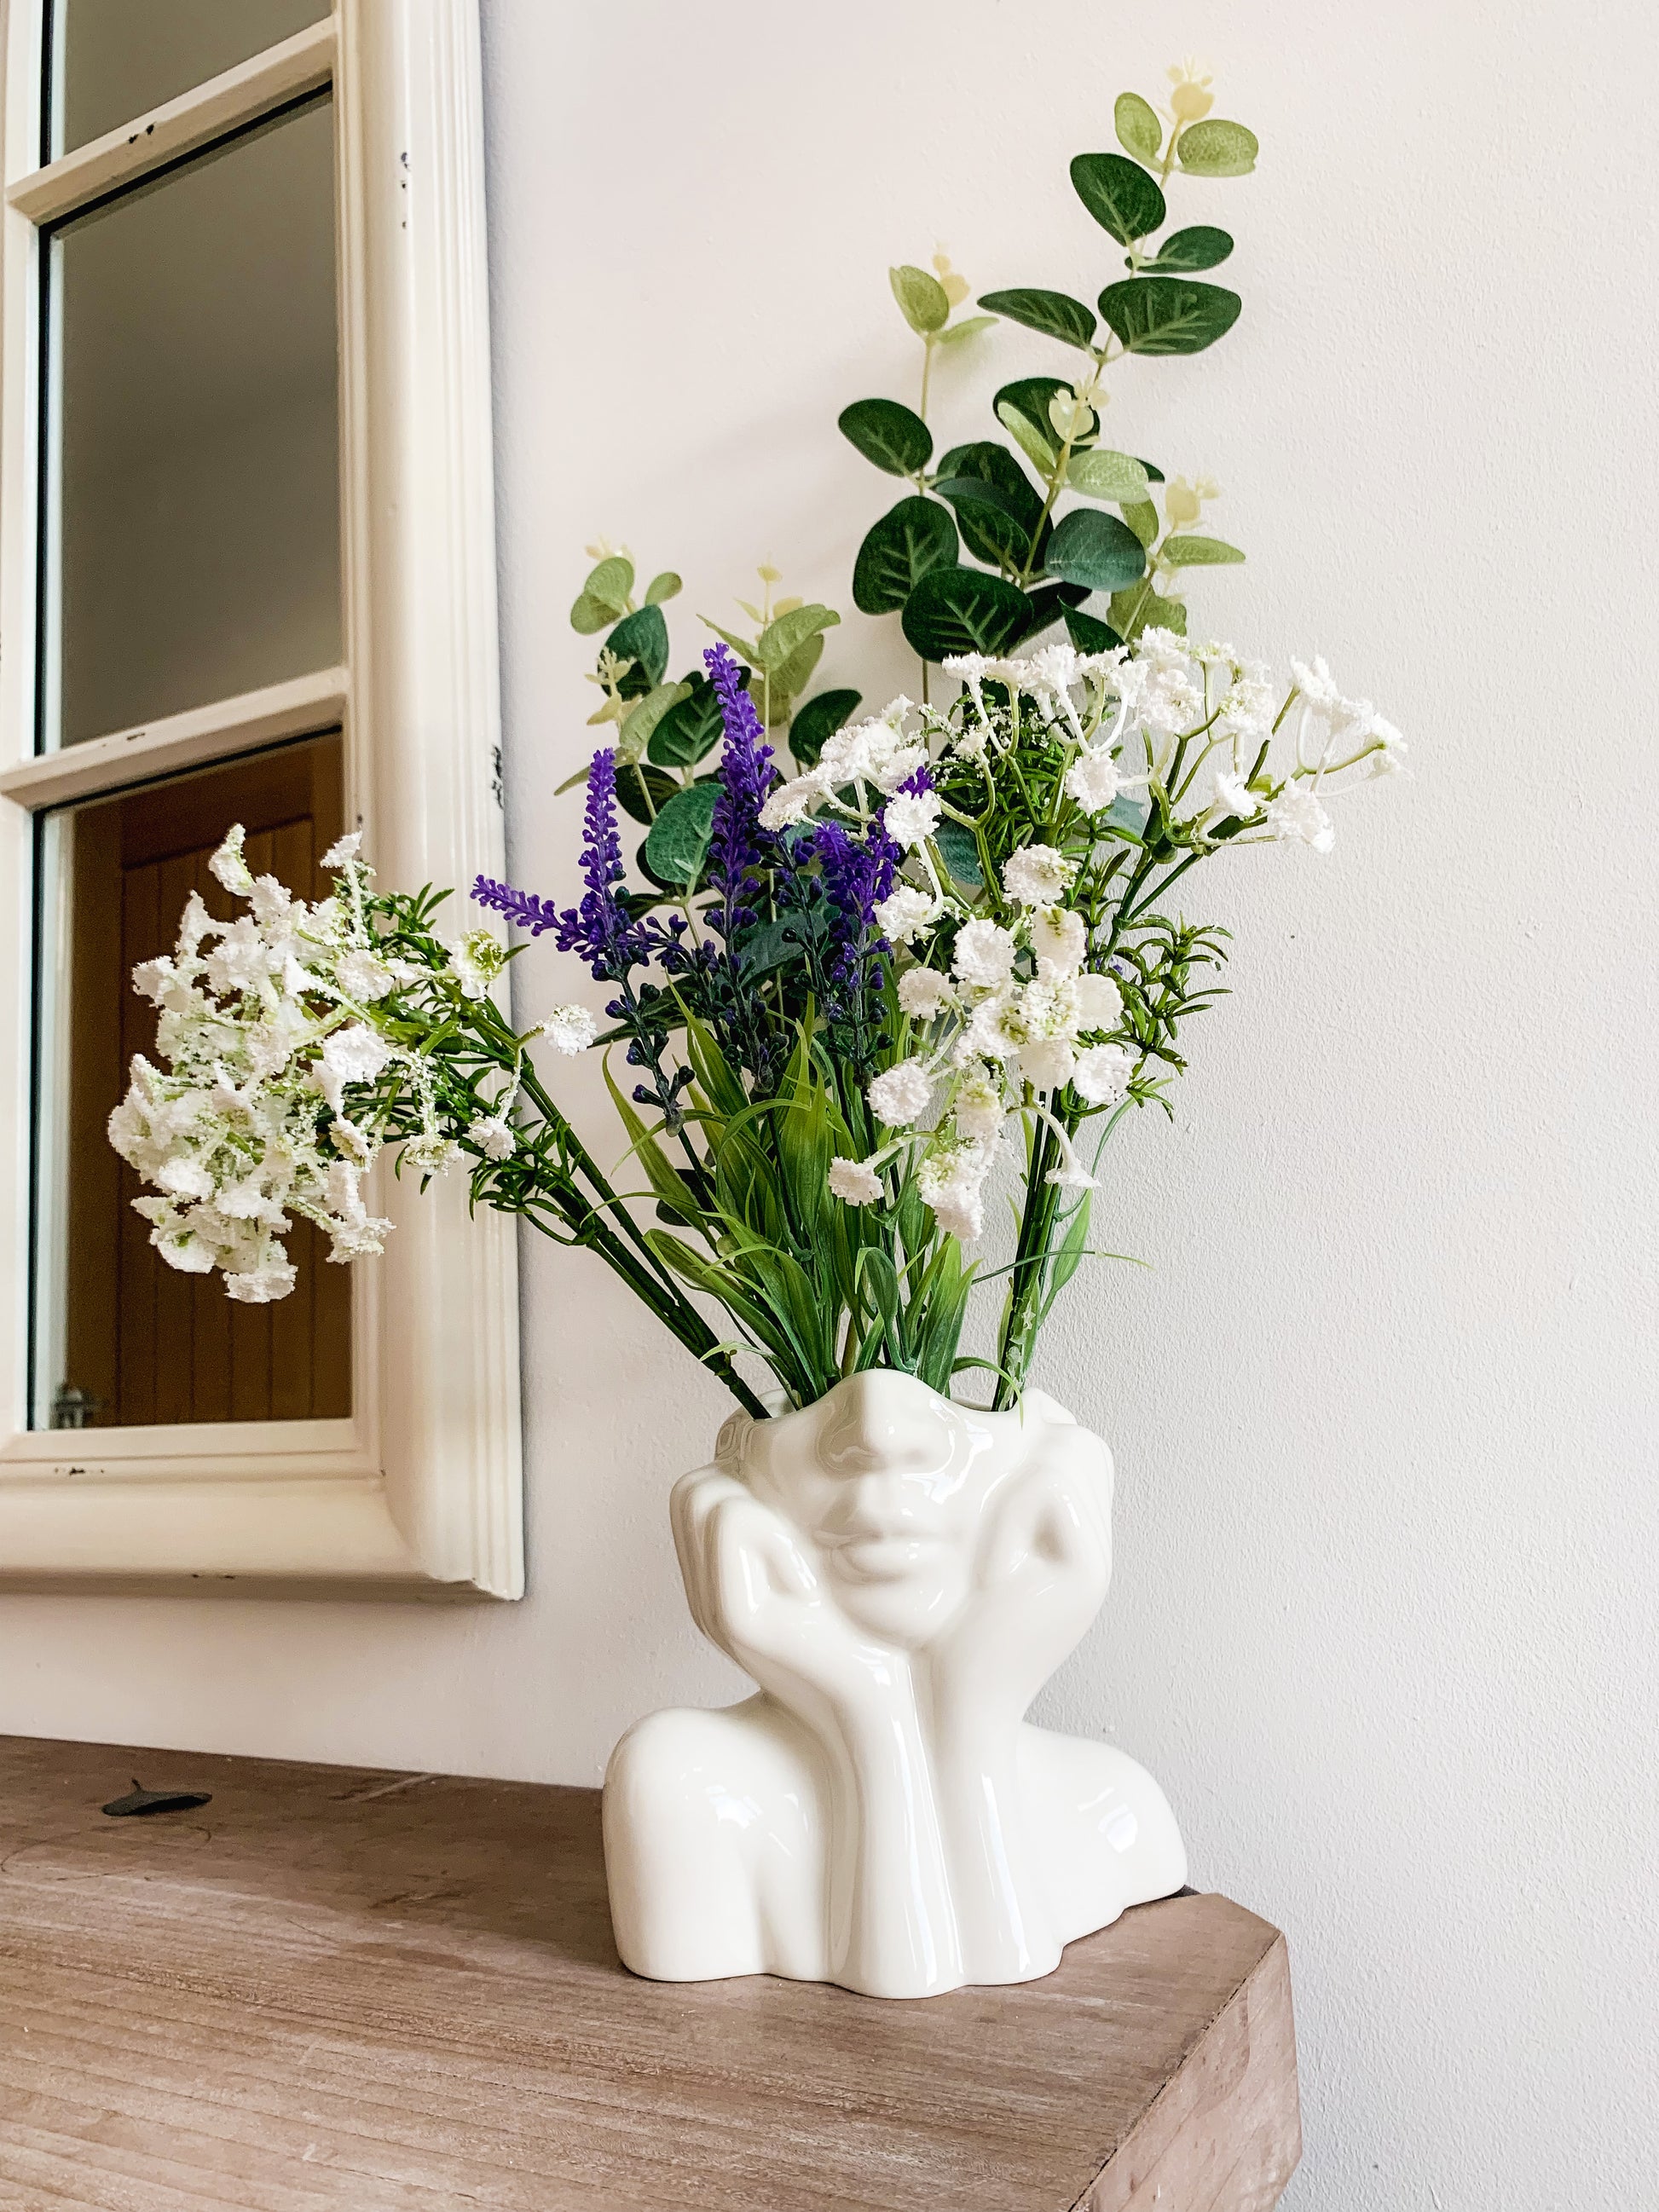 Unique White Ceramic Floral Ceramic Face Vase With Wide Mouth